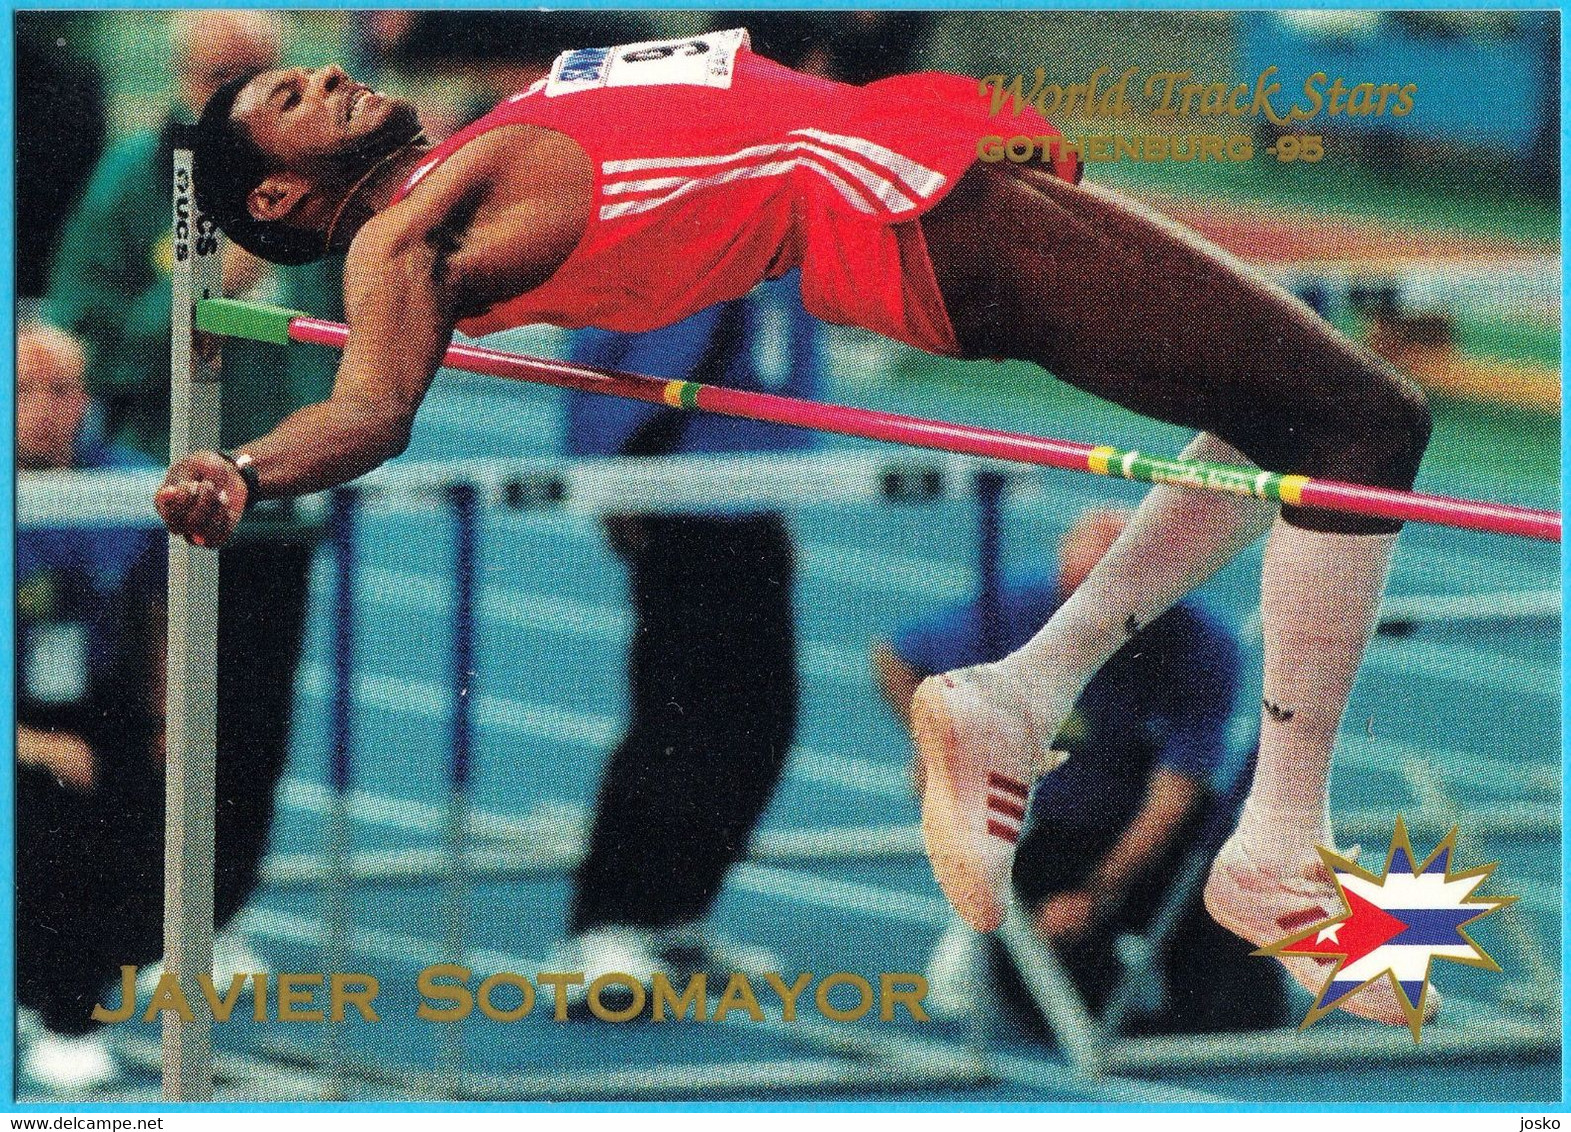 JAVIER SOTOMAYOR Cuba (High Jump) - 1995 WORLD CHAMPIONSHIPS IN ATHLETICS - Trading Card * Athletisme Athletik Atletica - Tarjetas